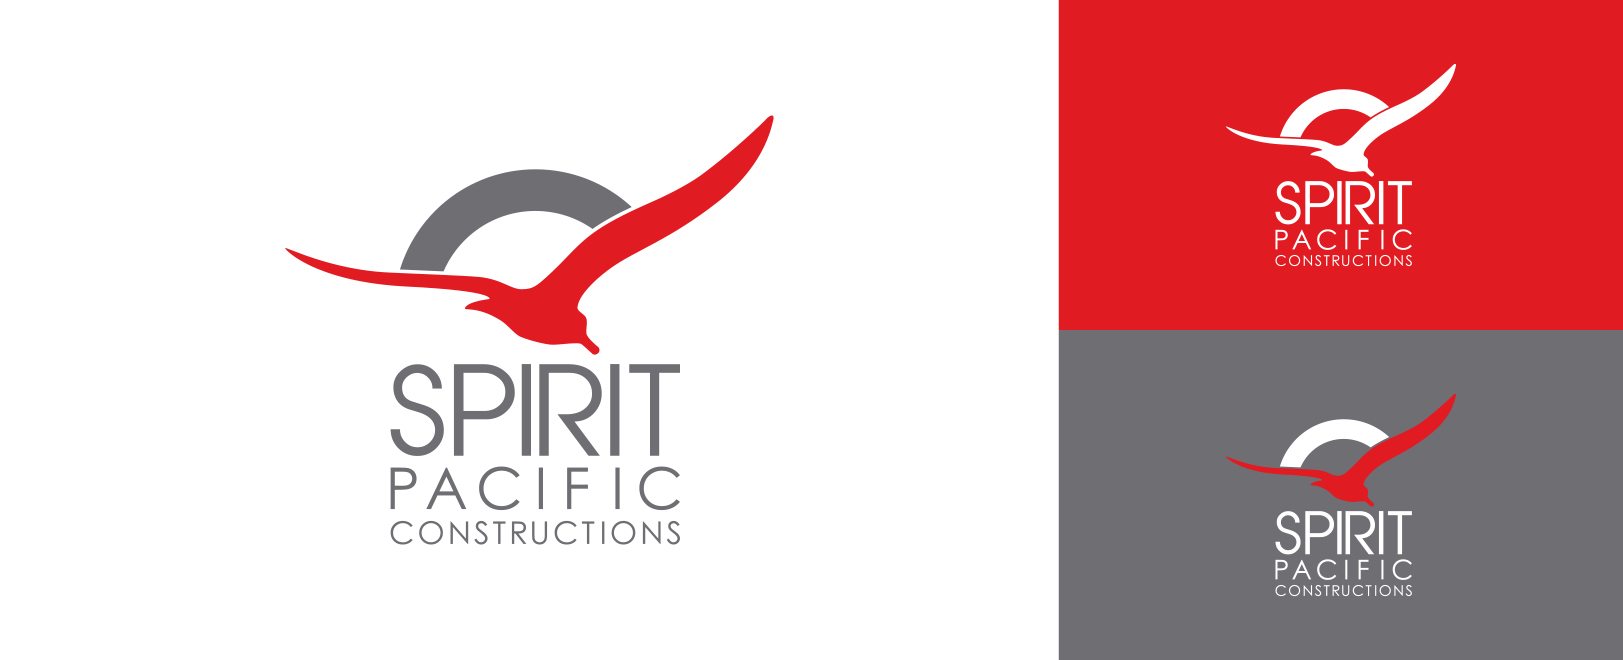 Spirit Pacific Constructions - Cronulla Web Design